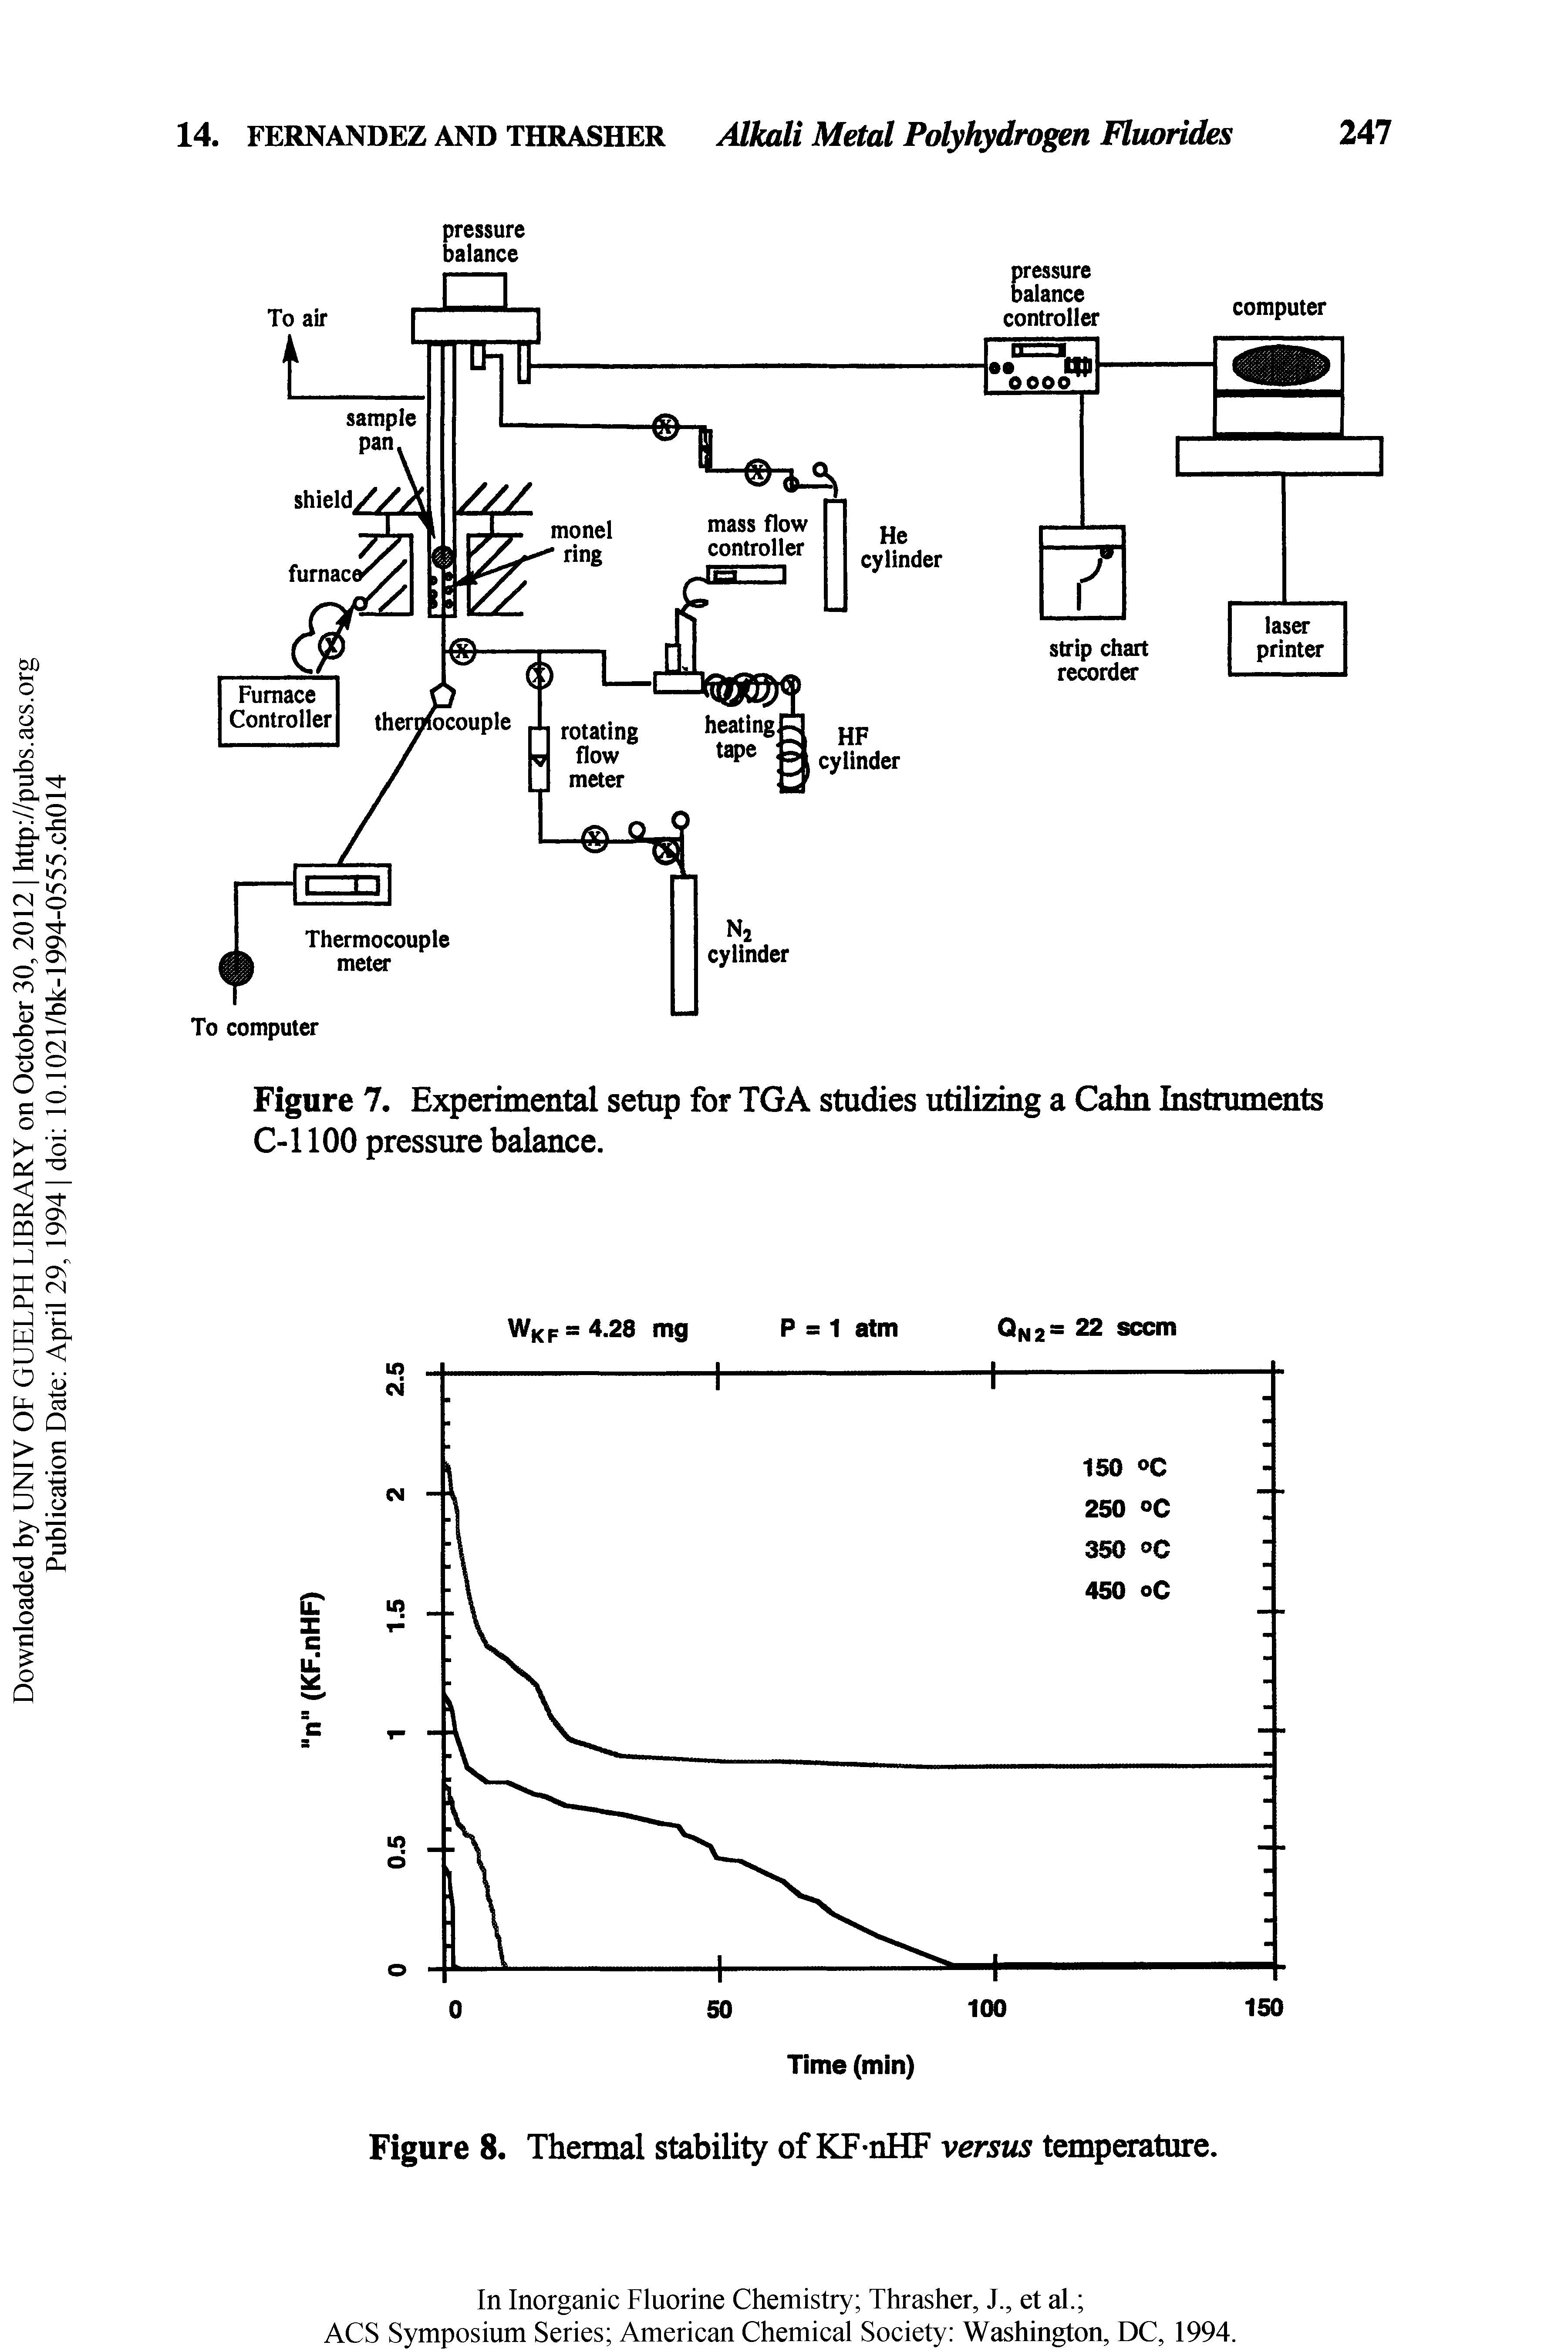 Figure 7. Experimental setup for TGA studies utilizing a Cahn Instruments C-1100 pressure balance.